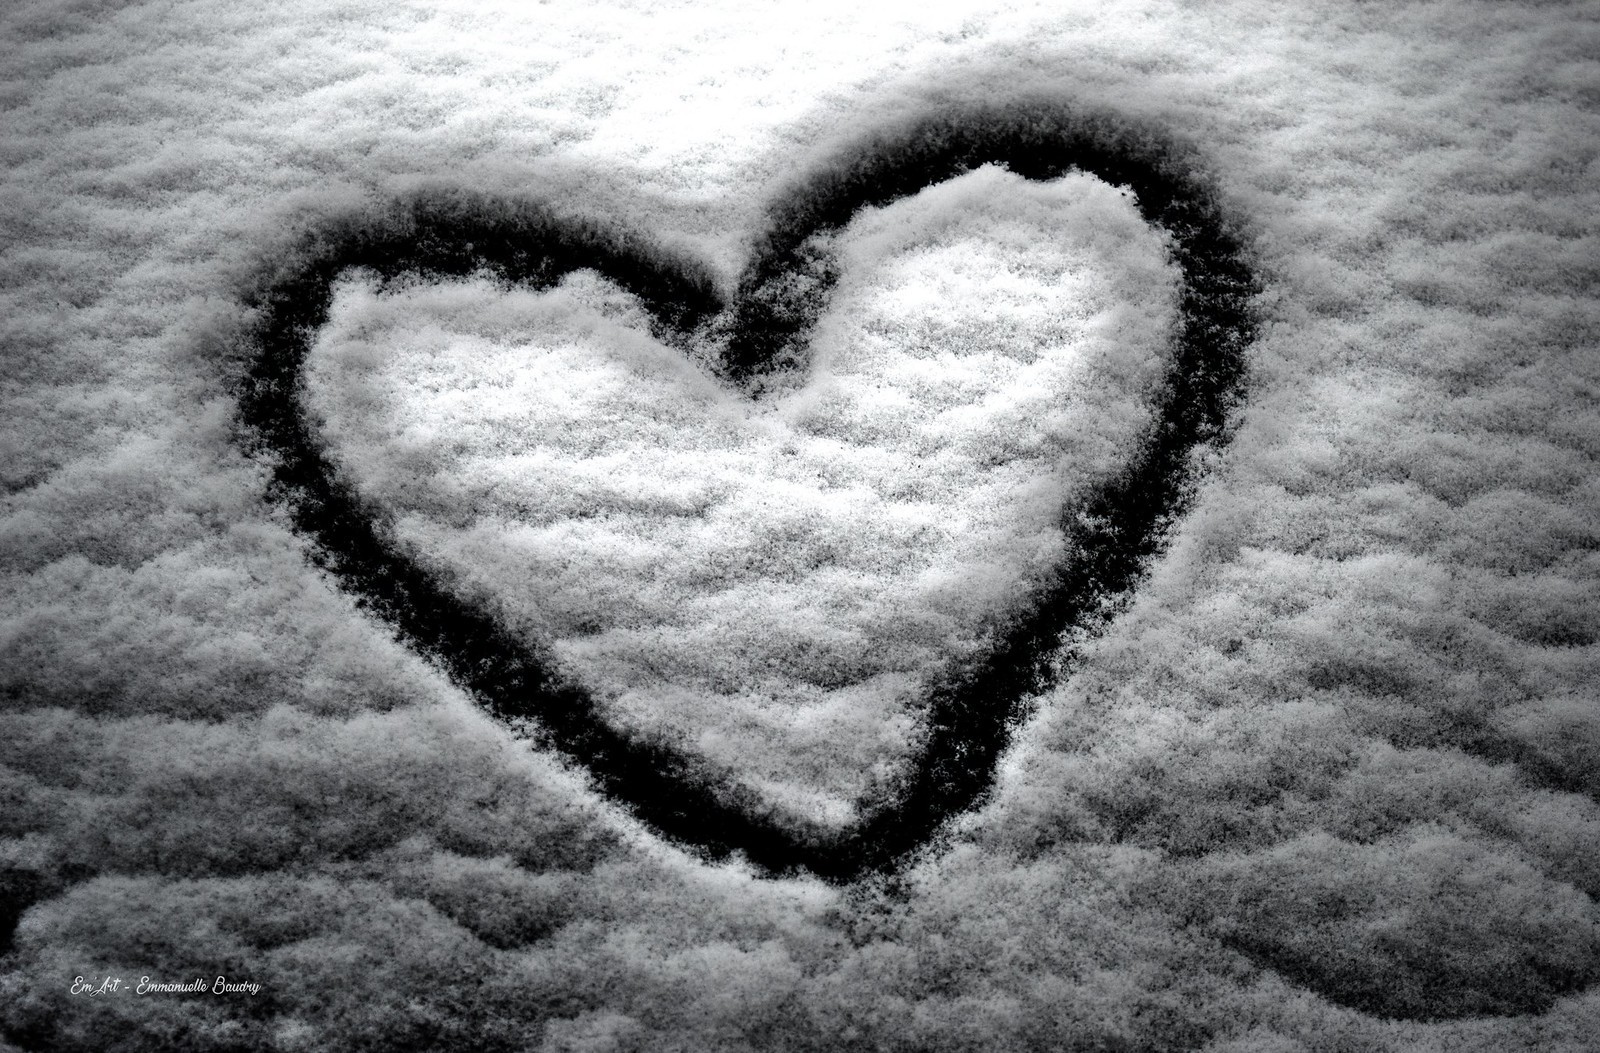 Heart of Snow